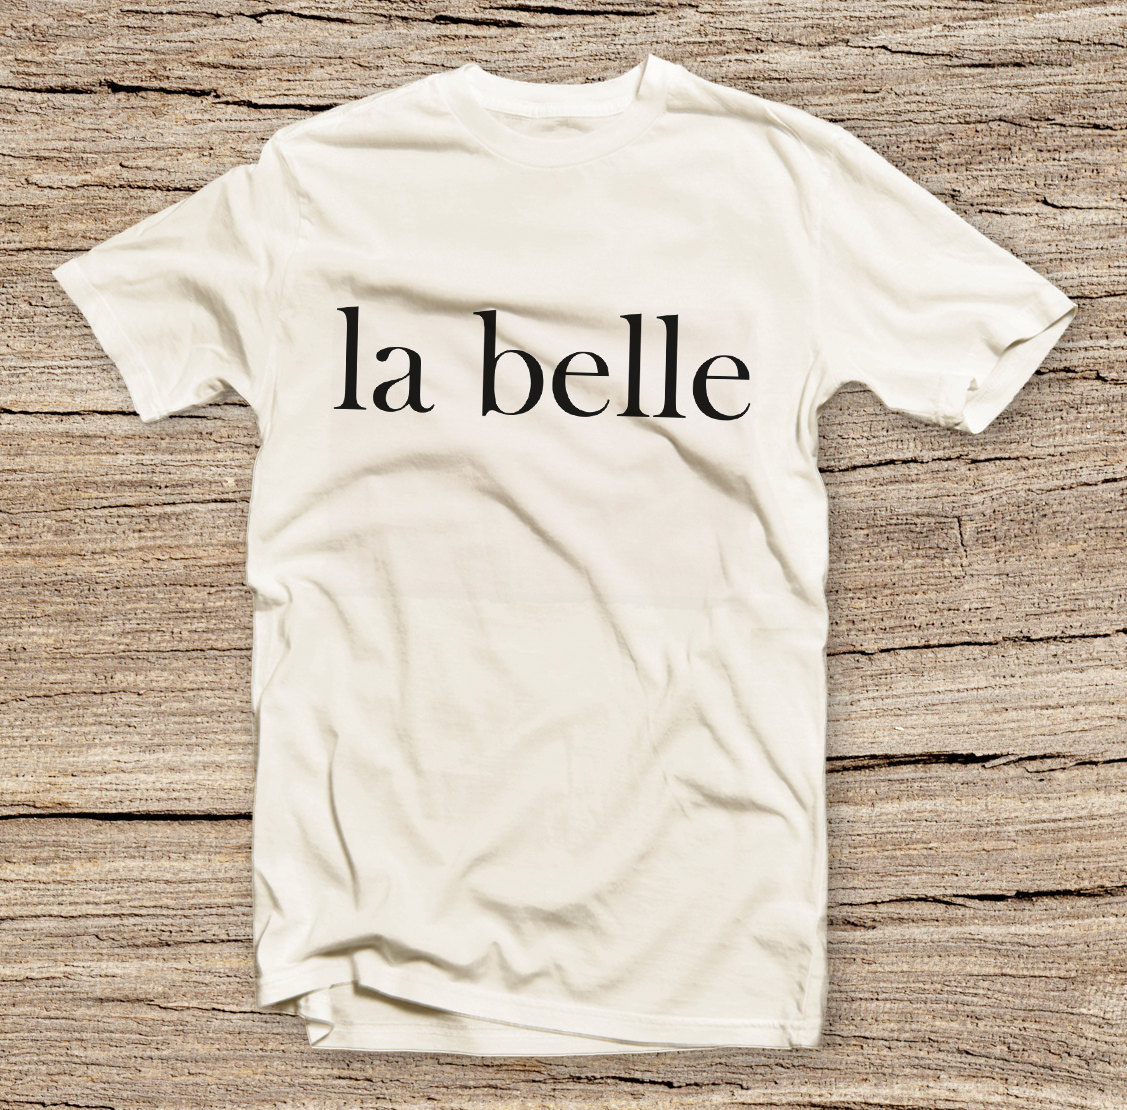 Pts-038 La Belle T-shirt, Fashion Style Printed T-shirt